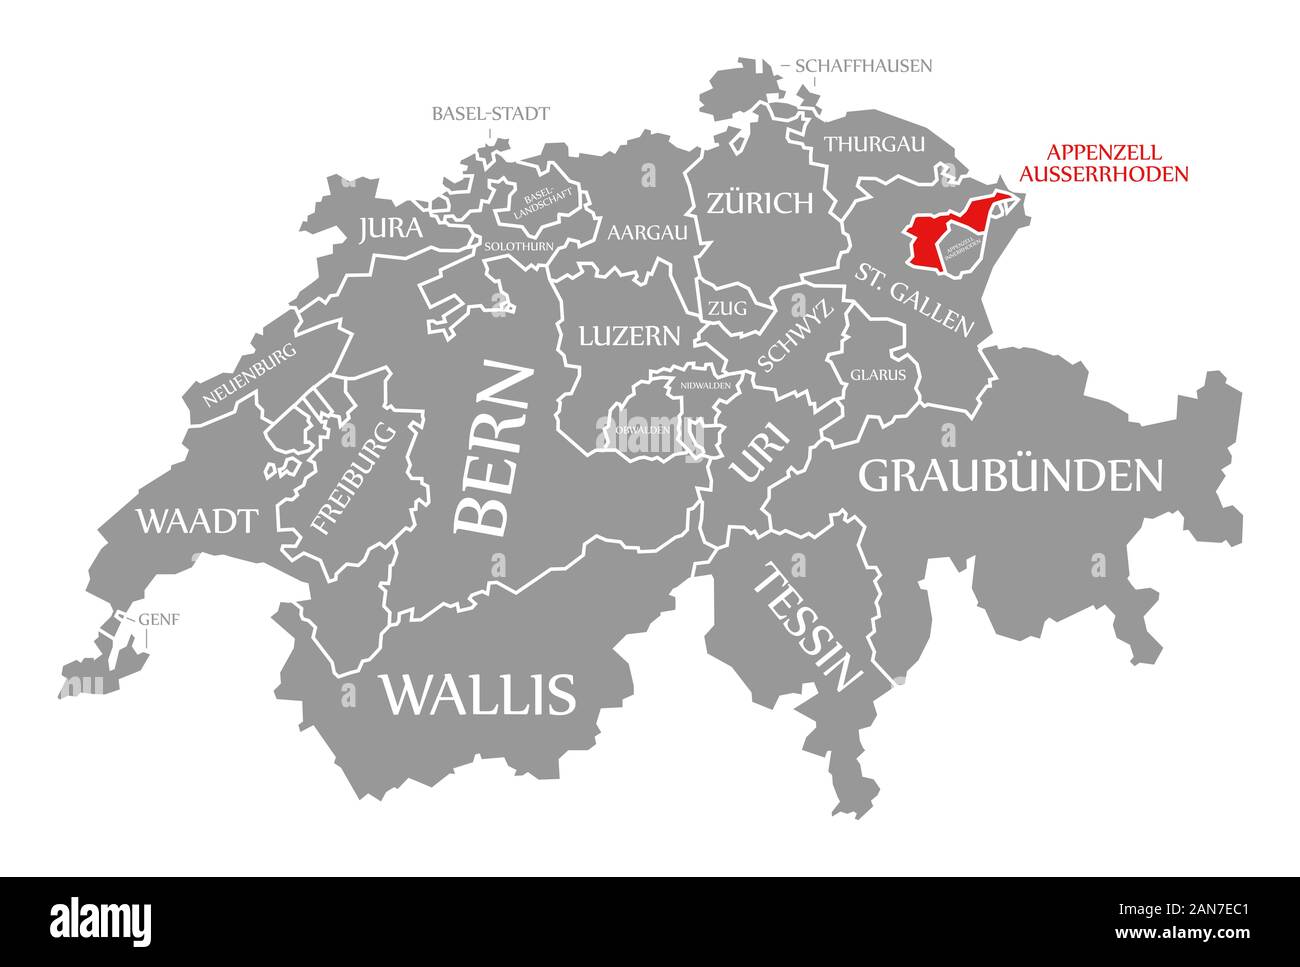 Appenzell Ausserrhoden red highlighted in map of Switzerland Stock Photo